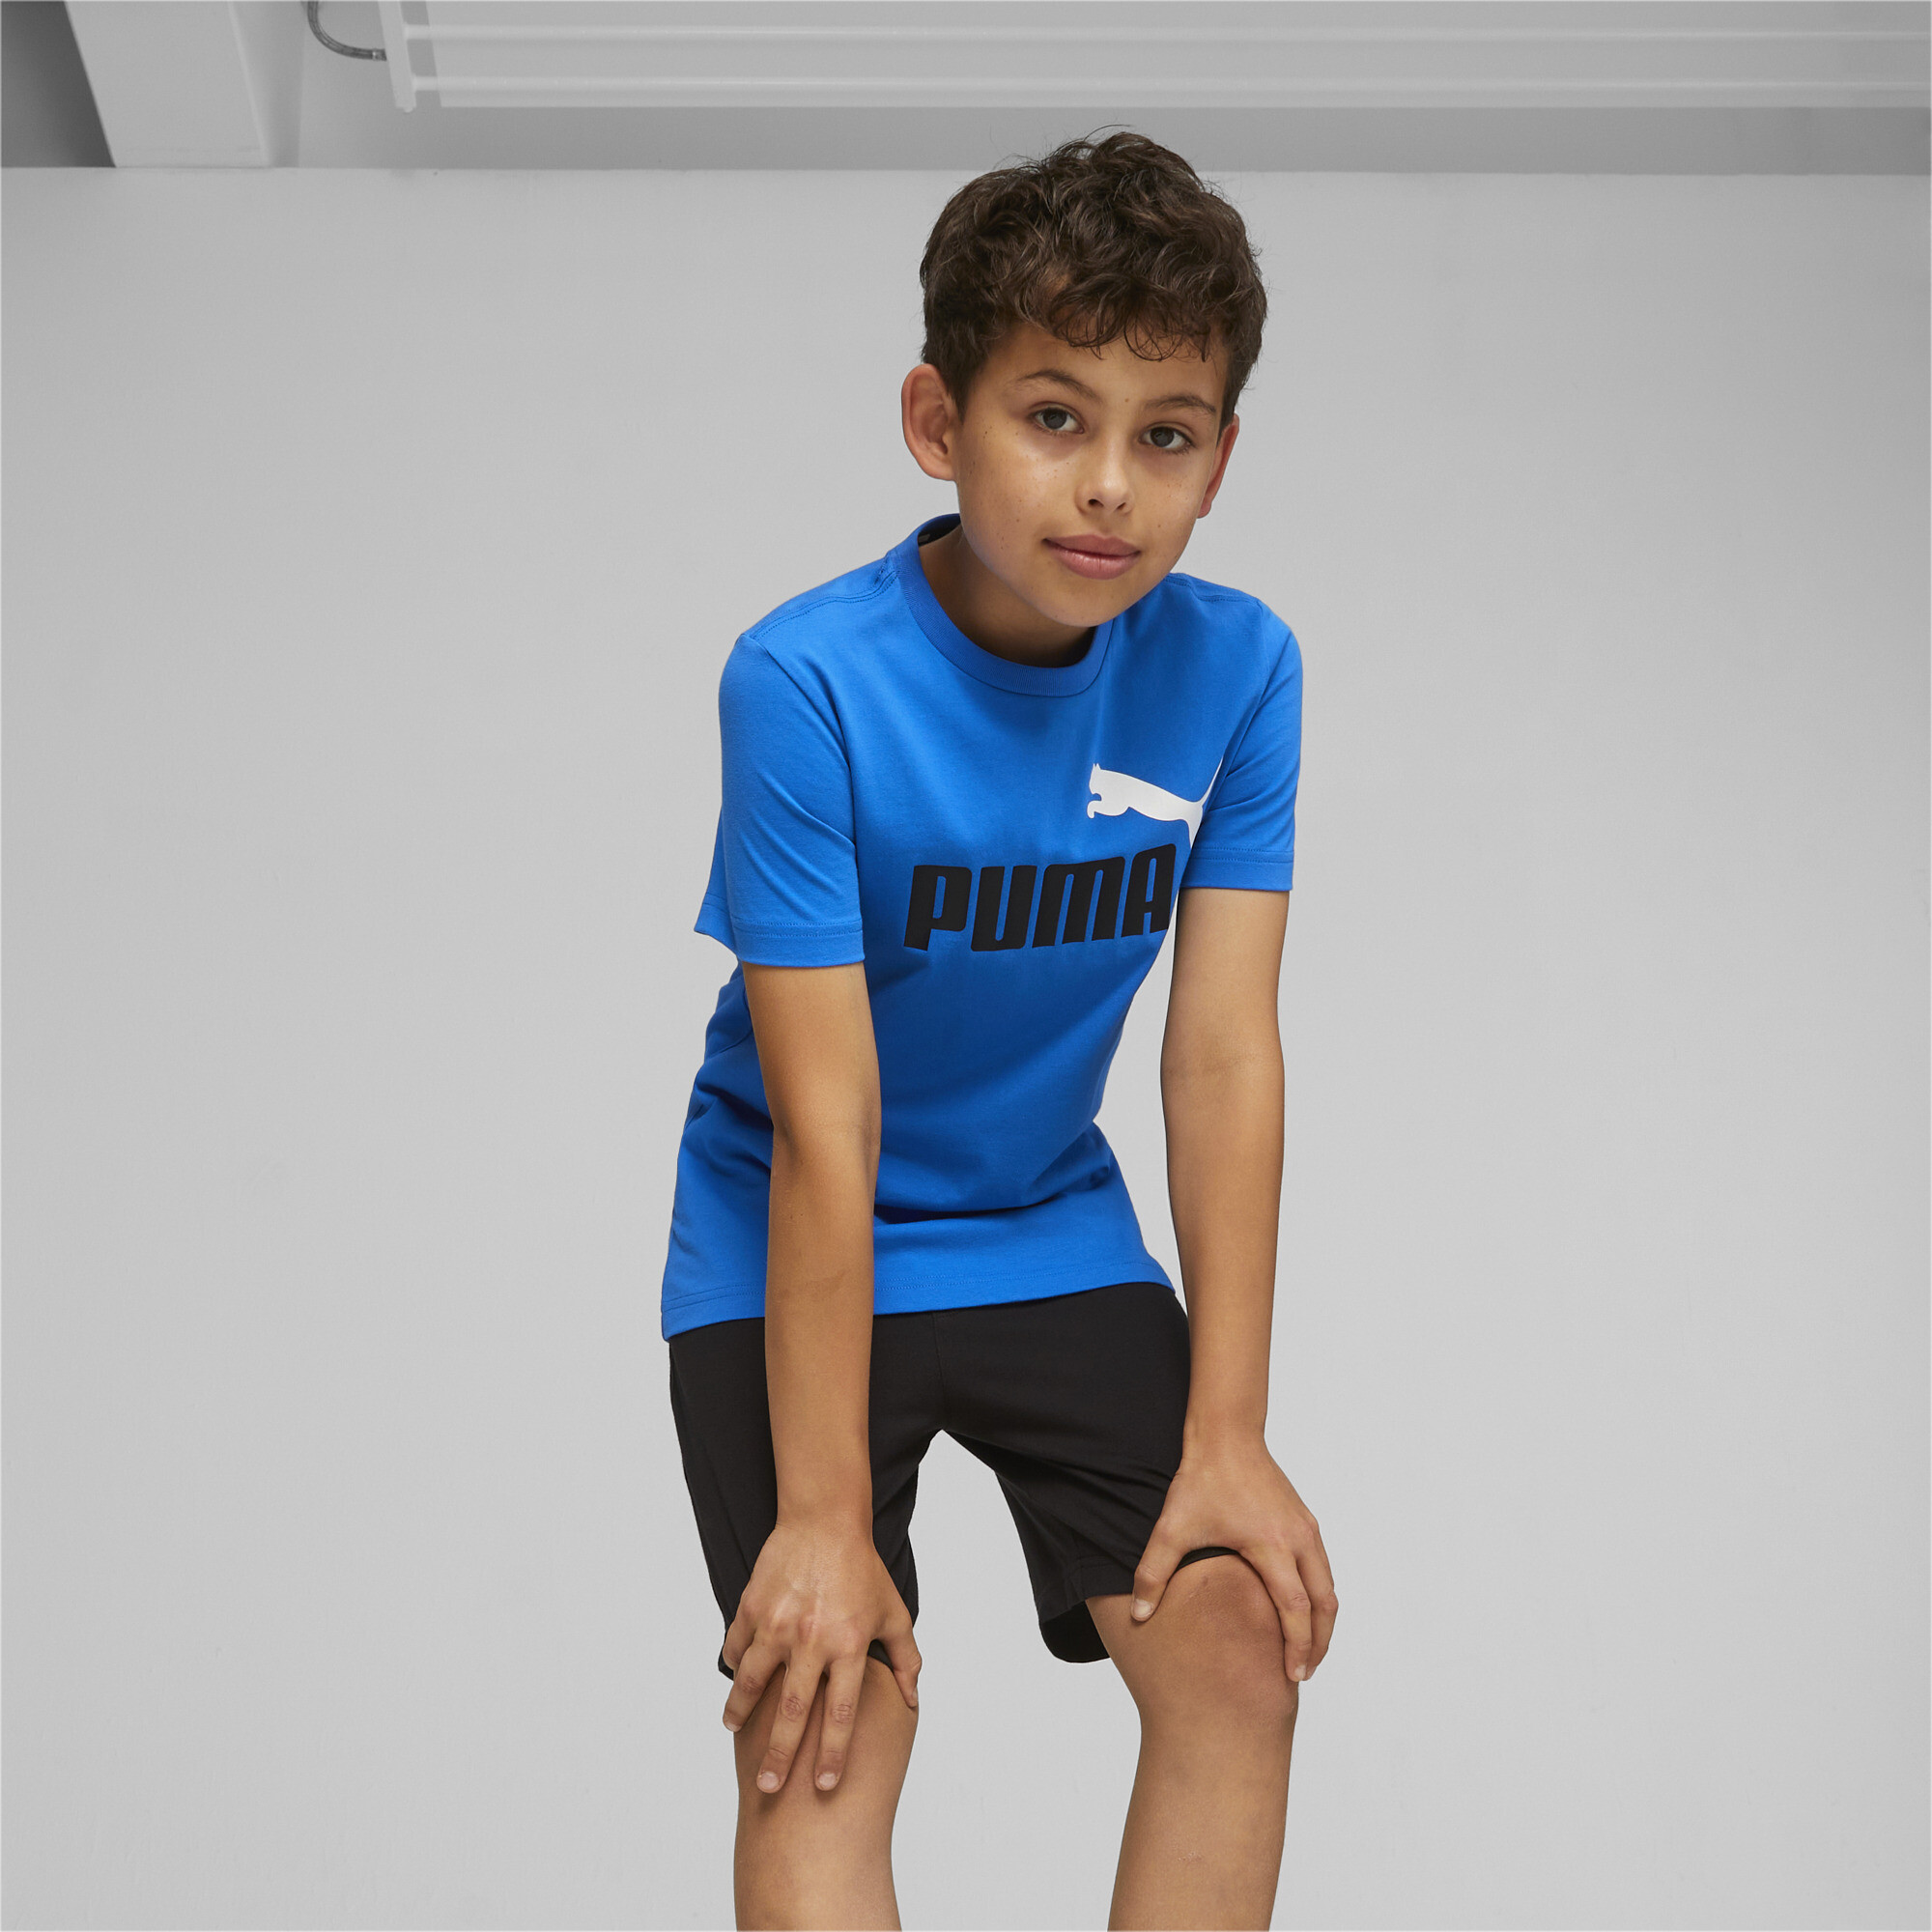 Men's Puma Jersey Youth Shorts Set, Blue, Size 11-12Y, Clothing